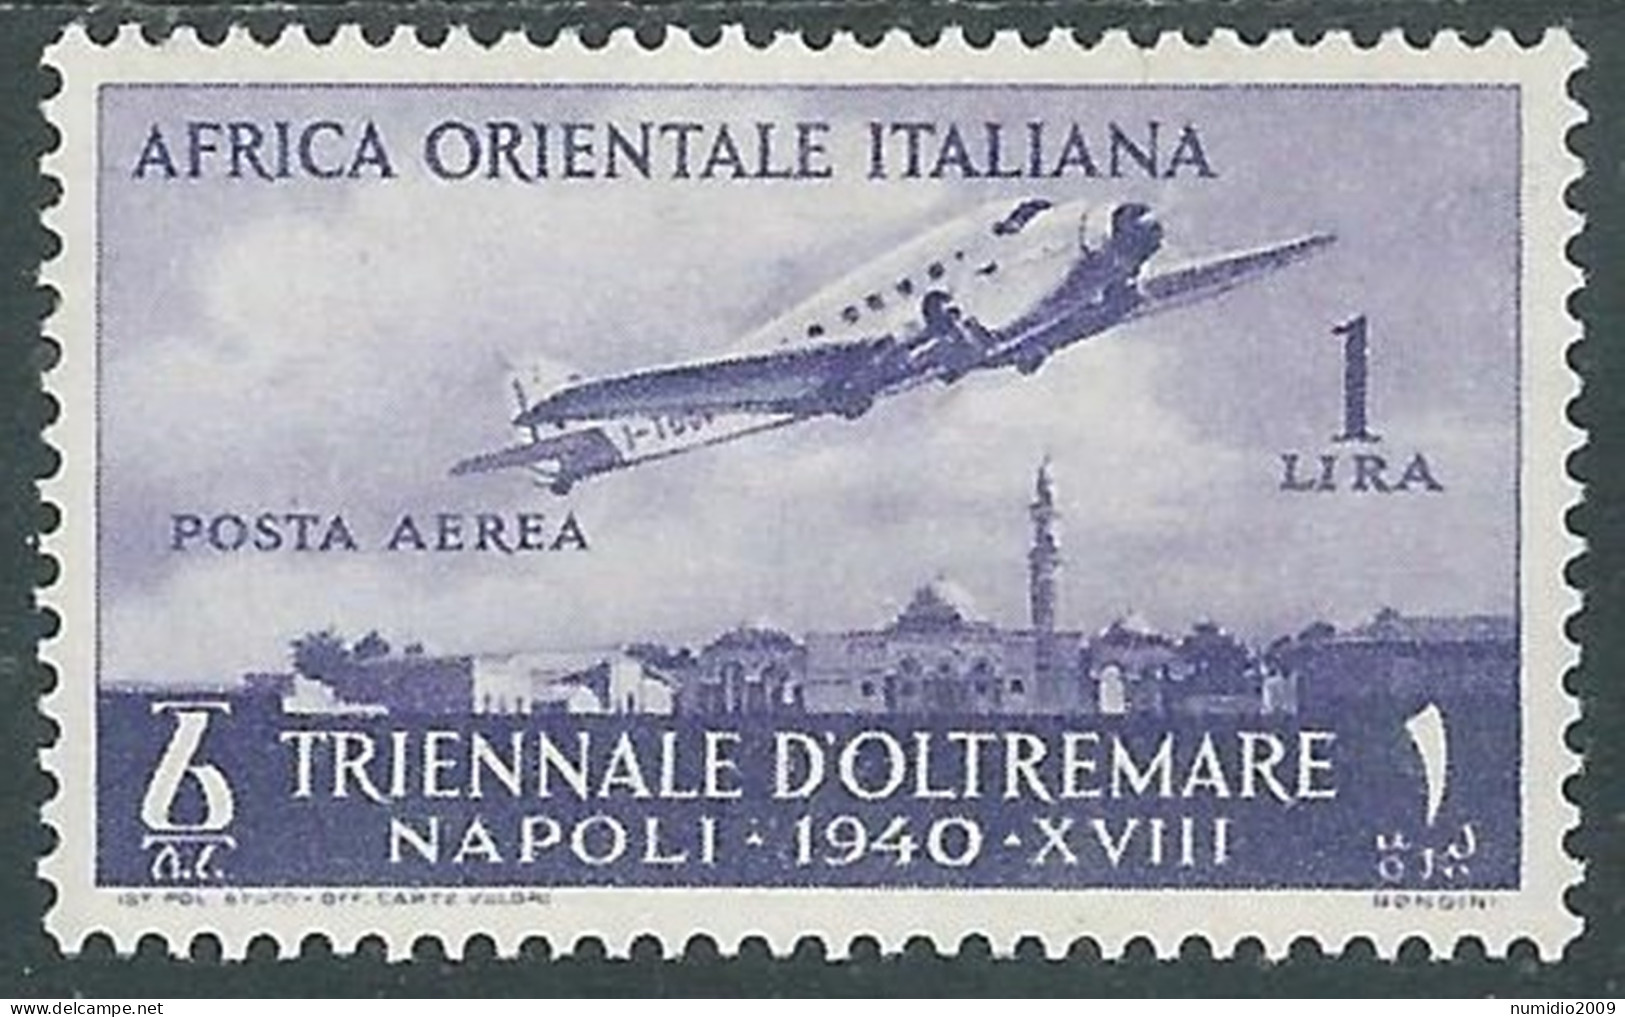 1940 AFRICA ORIENTALE ITALIANA POSTA AEREA TRIENNALE OLTREMARE 1 LIRA MH * I43 - Italian Eastern Africa